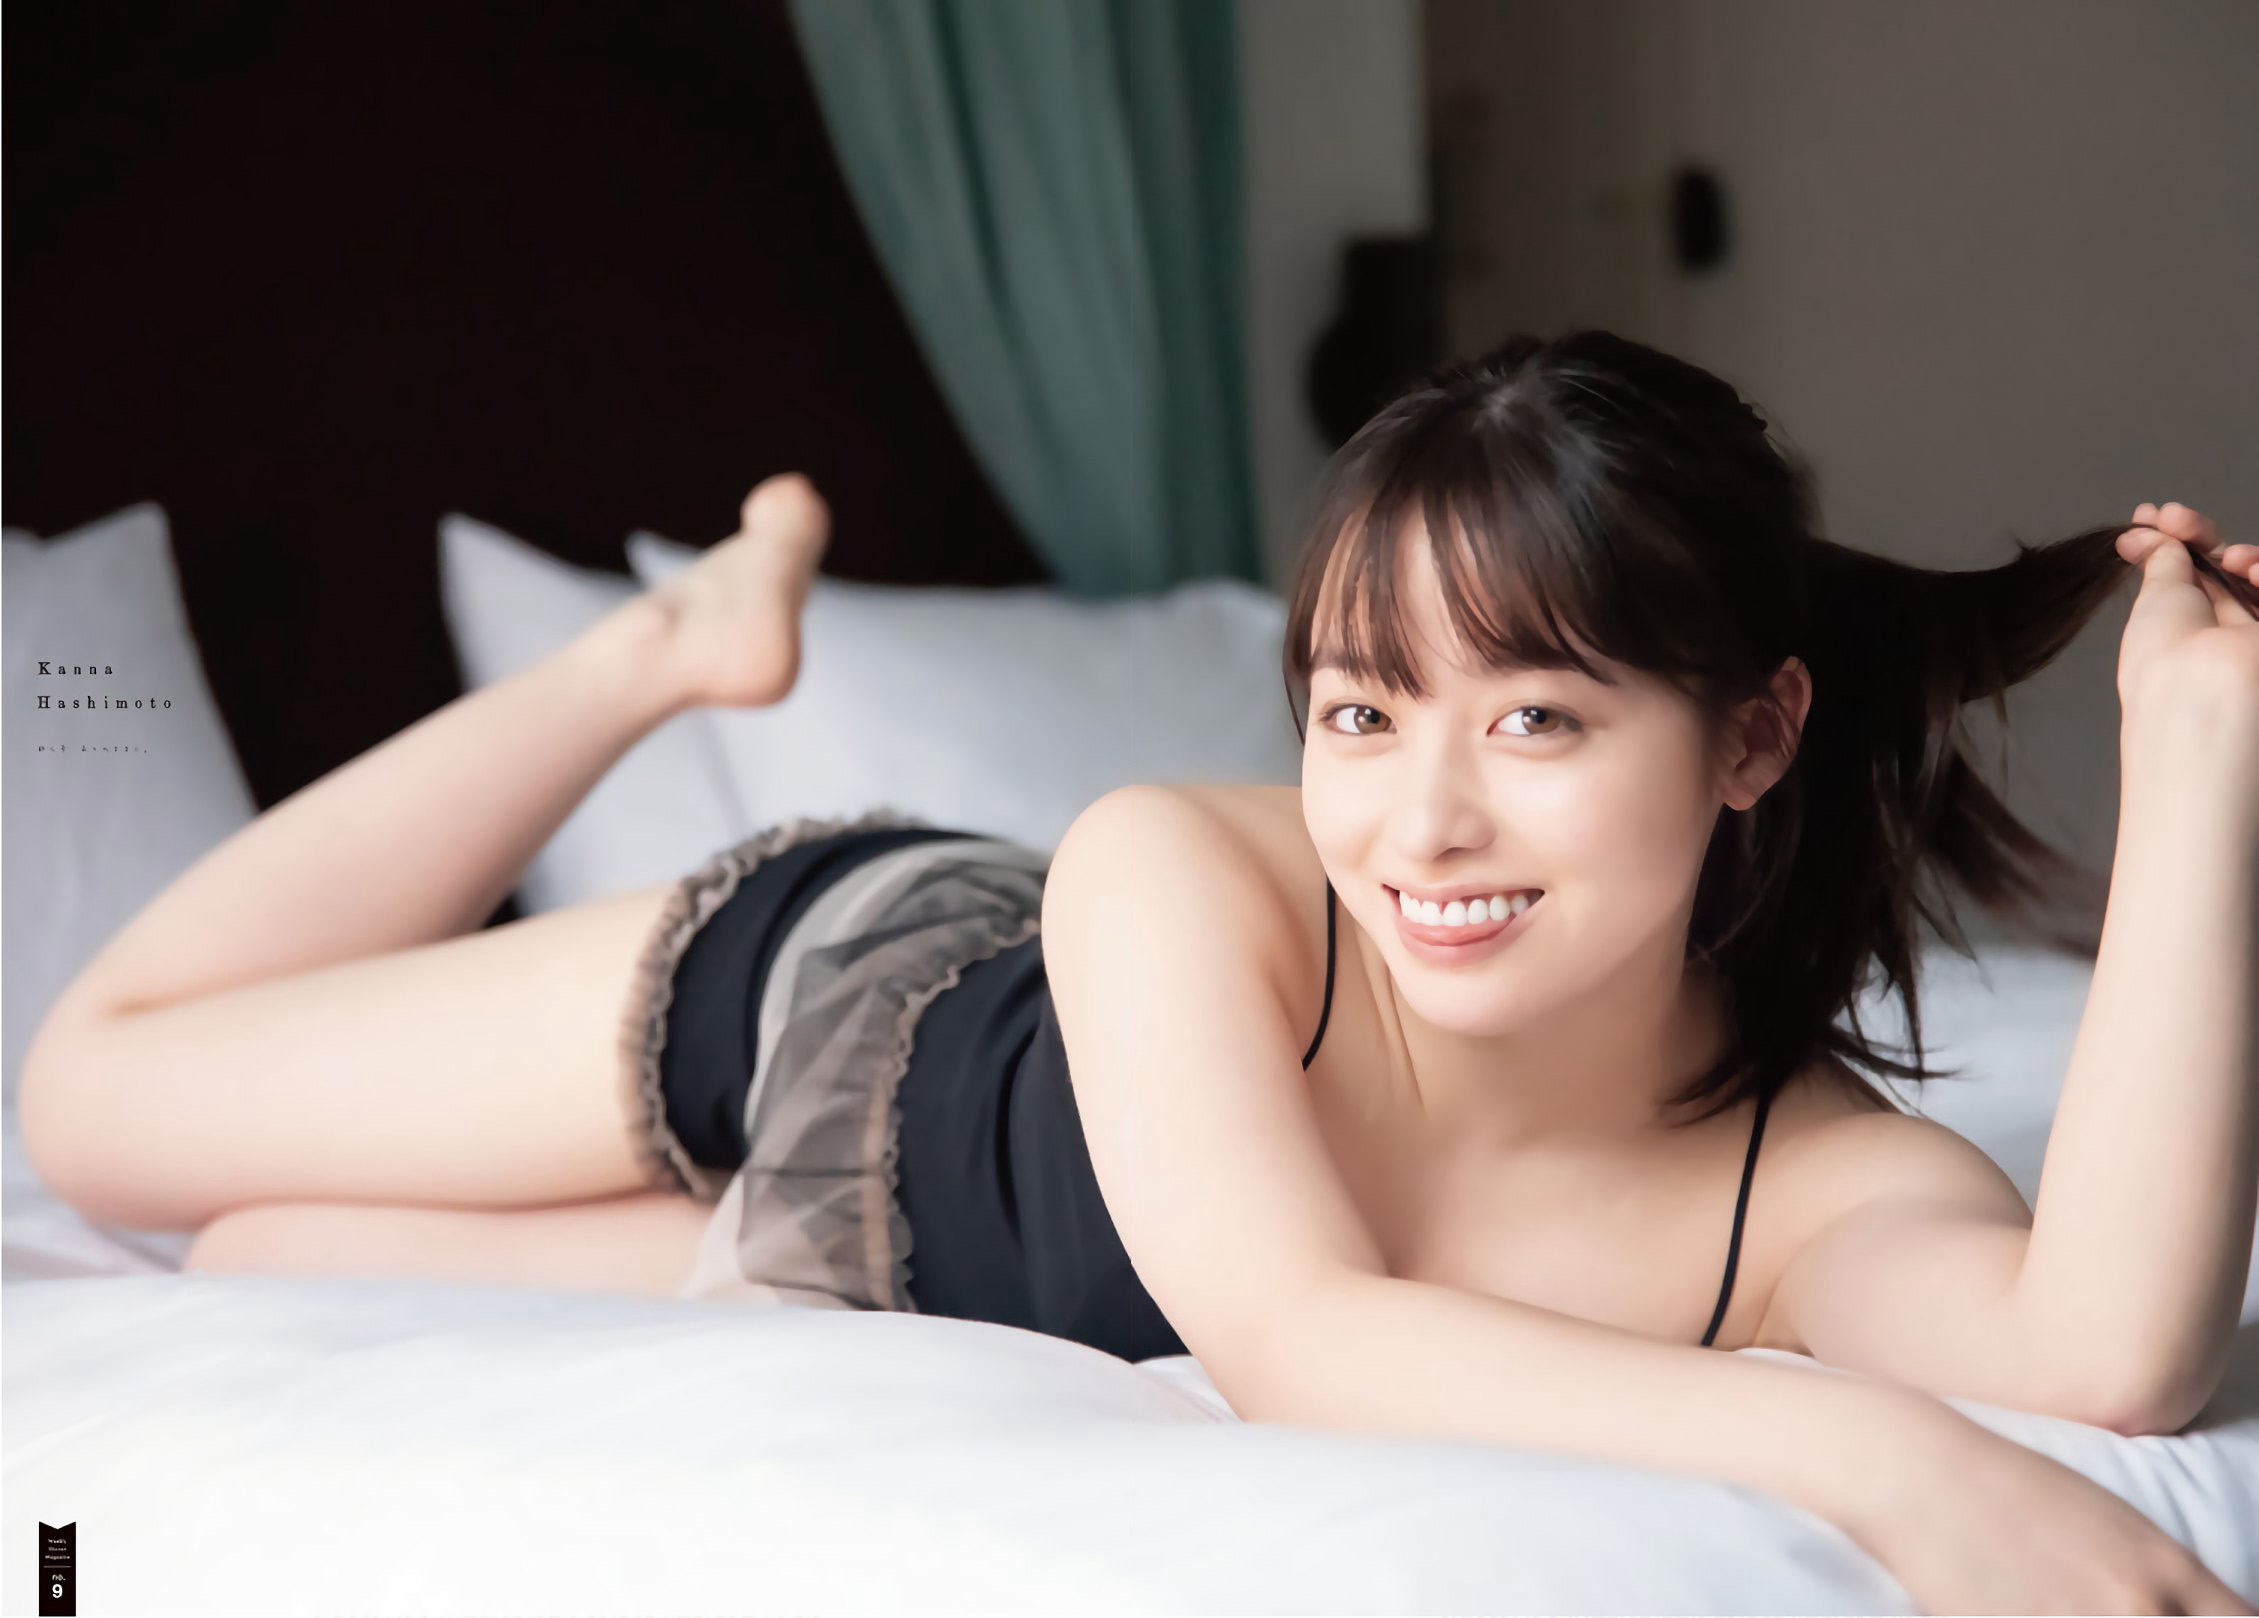 Kanna Hashimoto Bed Smile Asian 2259x1618